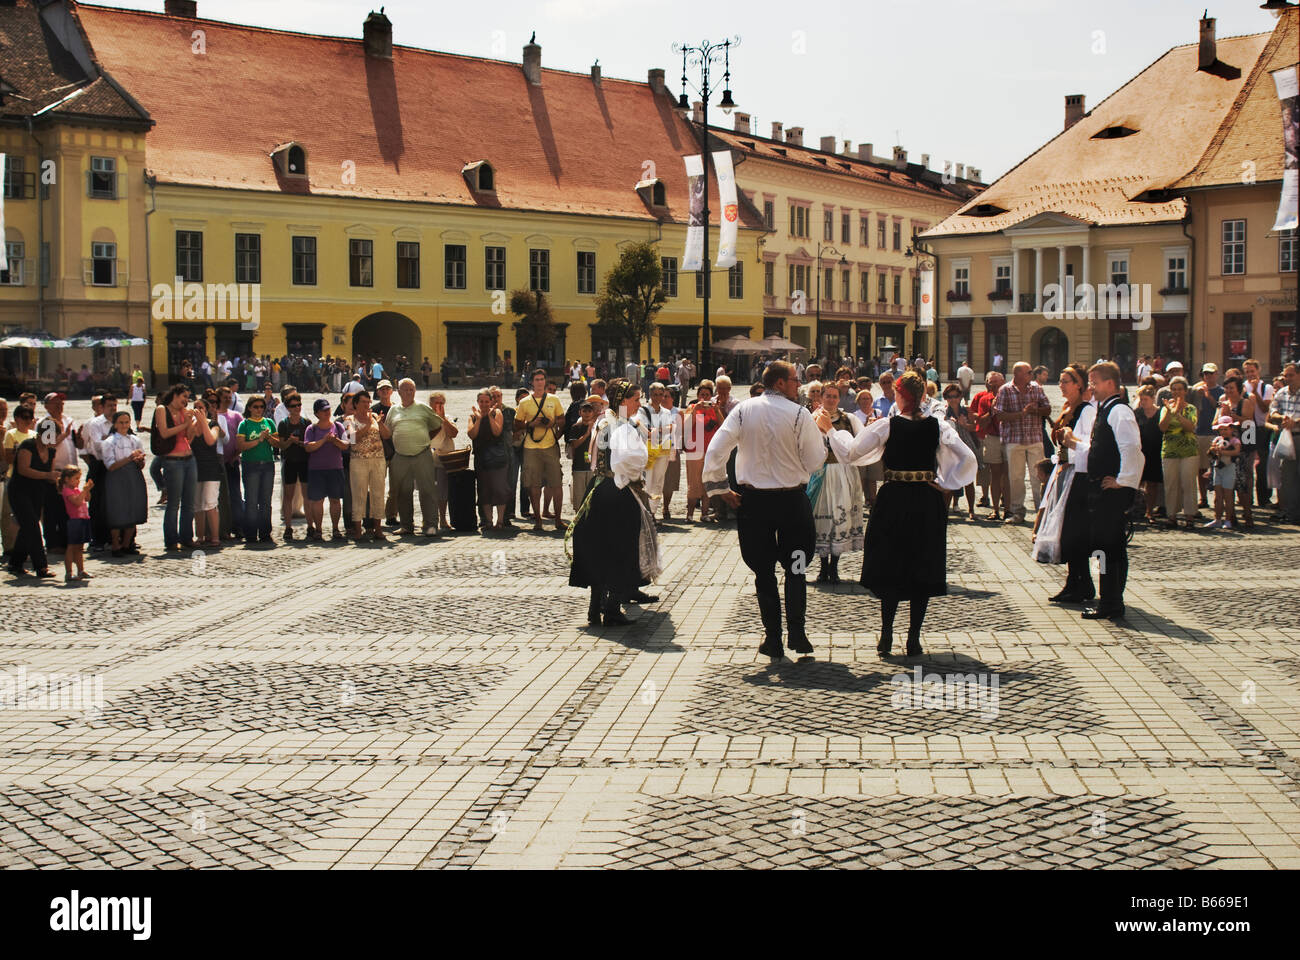 Traditional dancing in the main town square of Piata Mare in Sibiu Romania Stock Photo